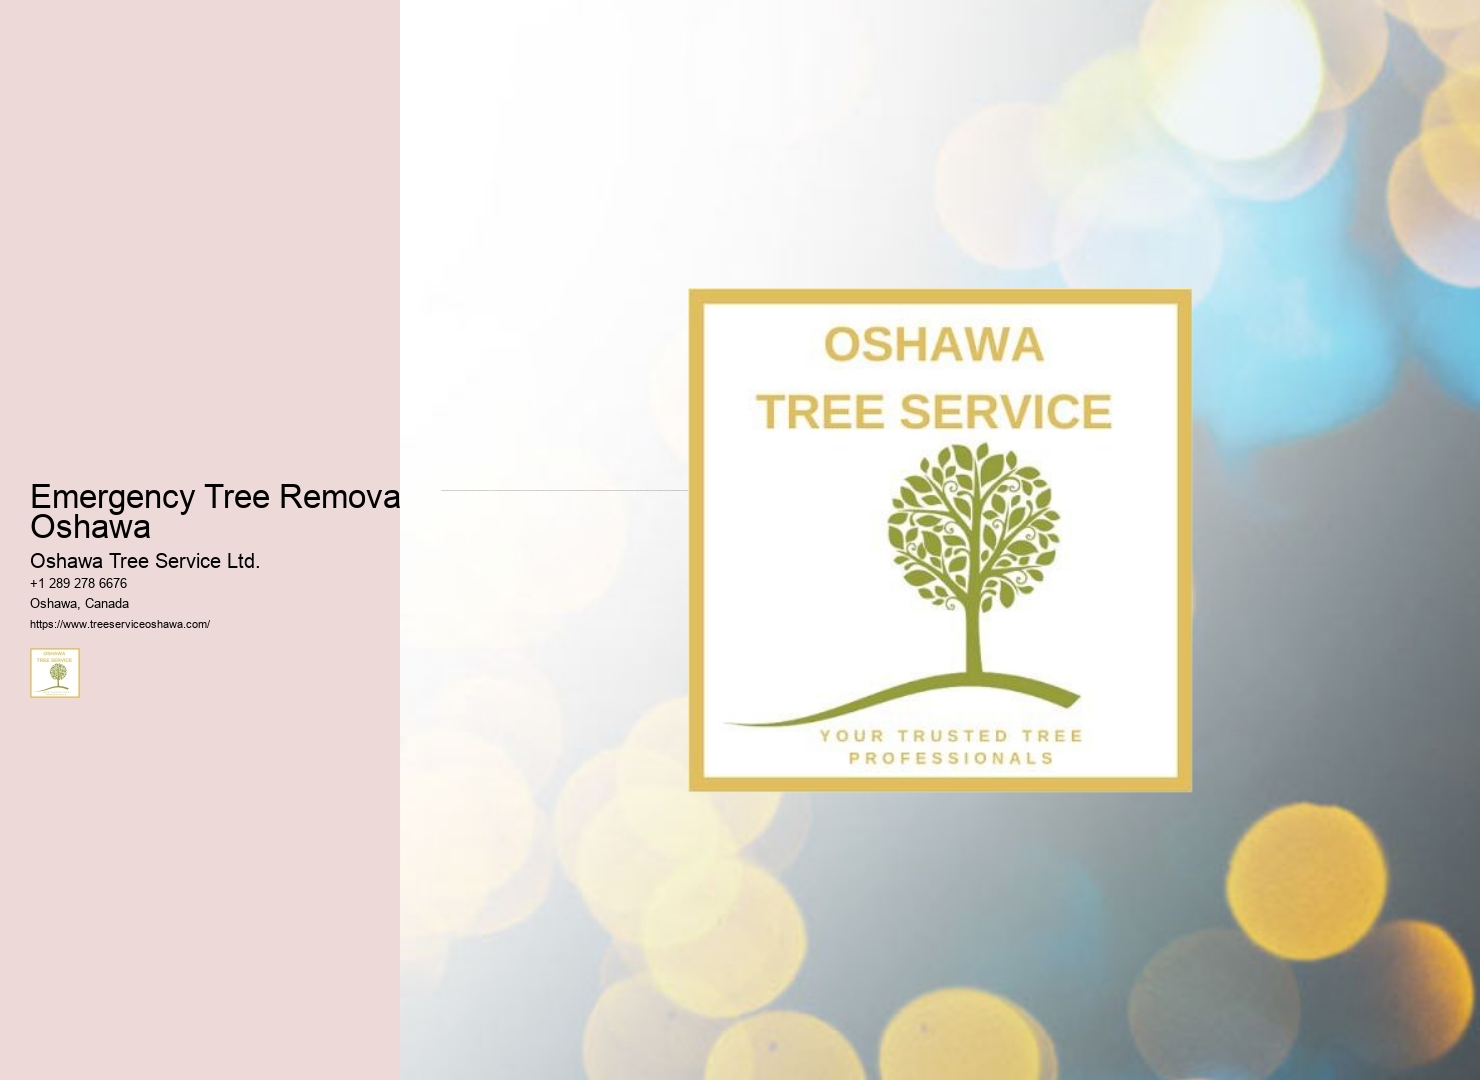 Emergency Tree Removal Oshawa